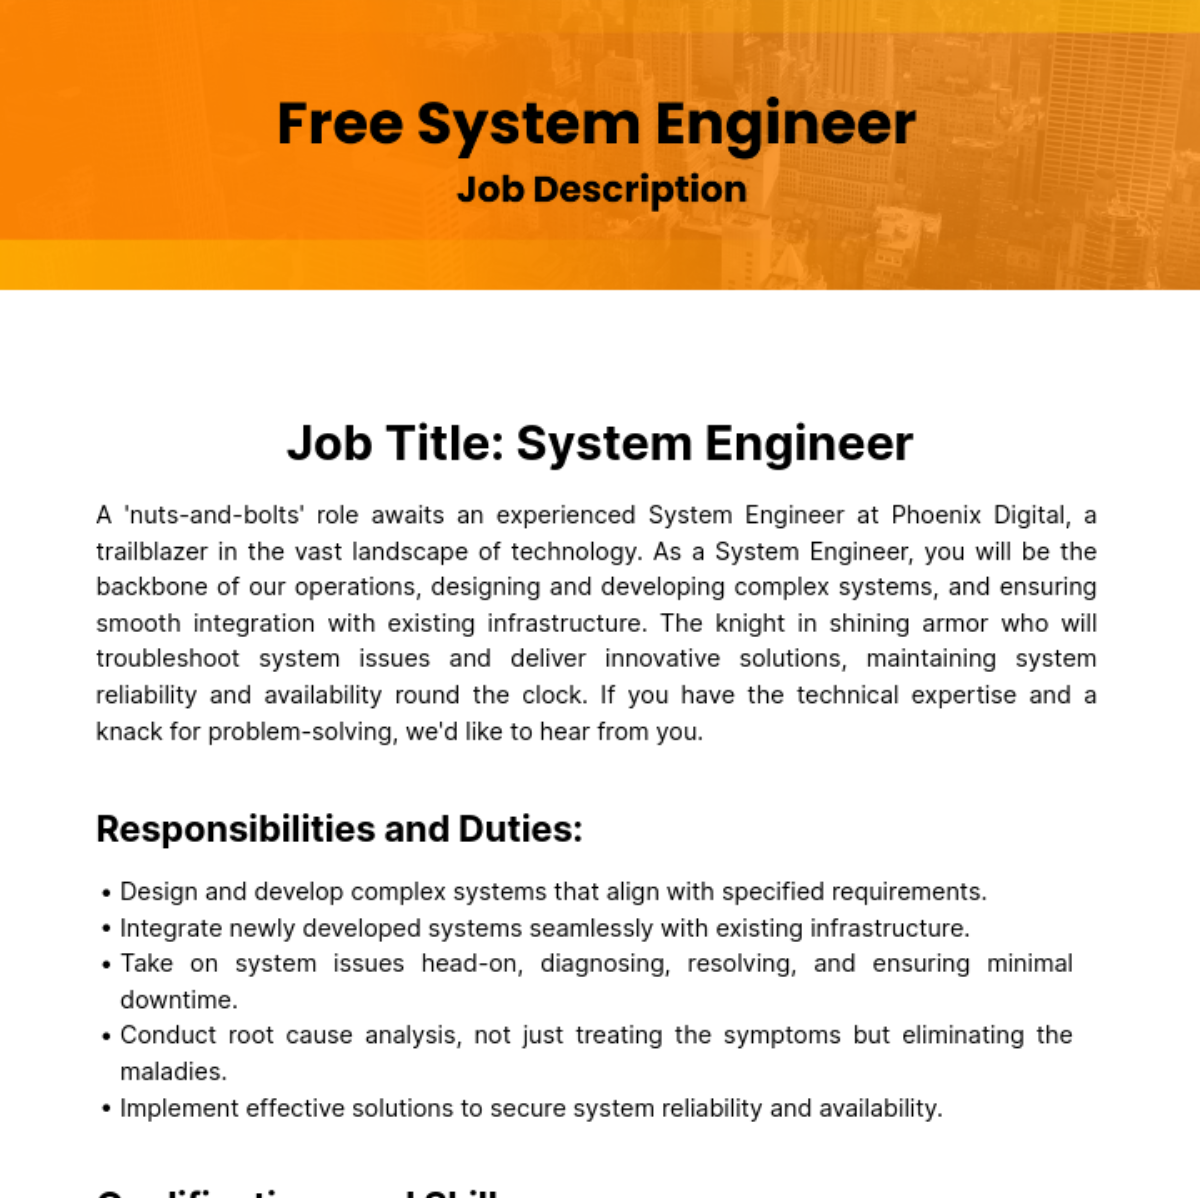 Free System Engineer Job Description Template